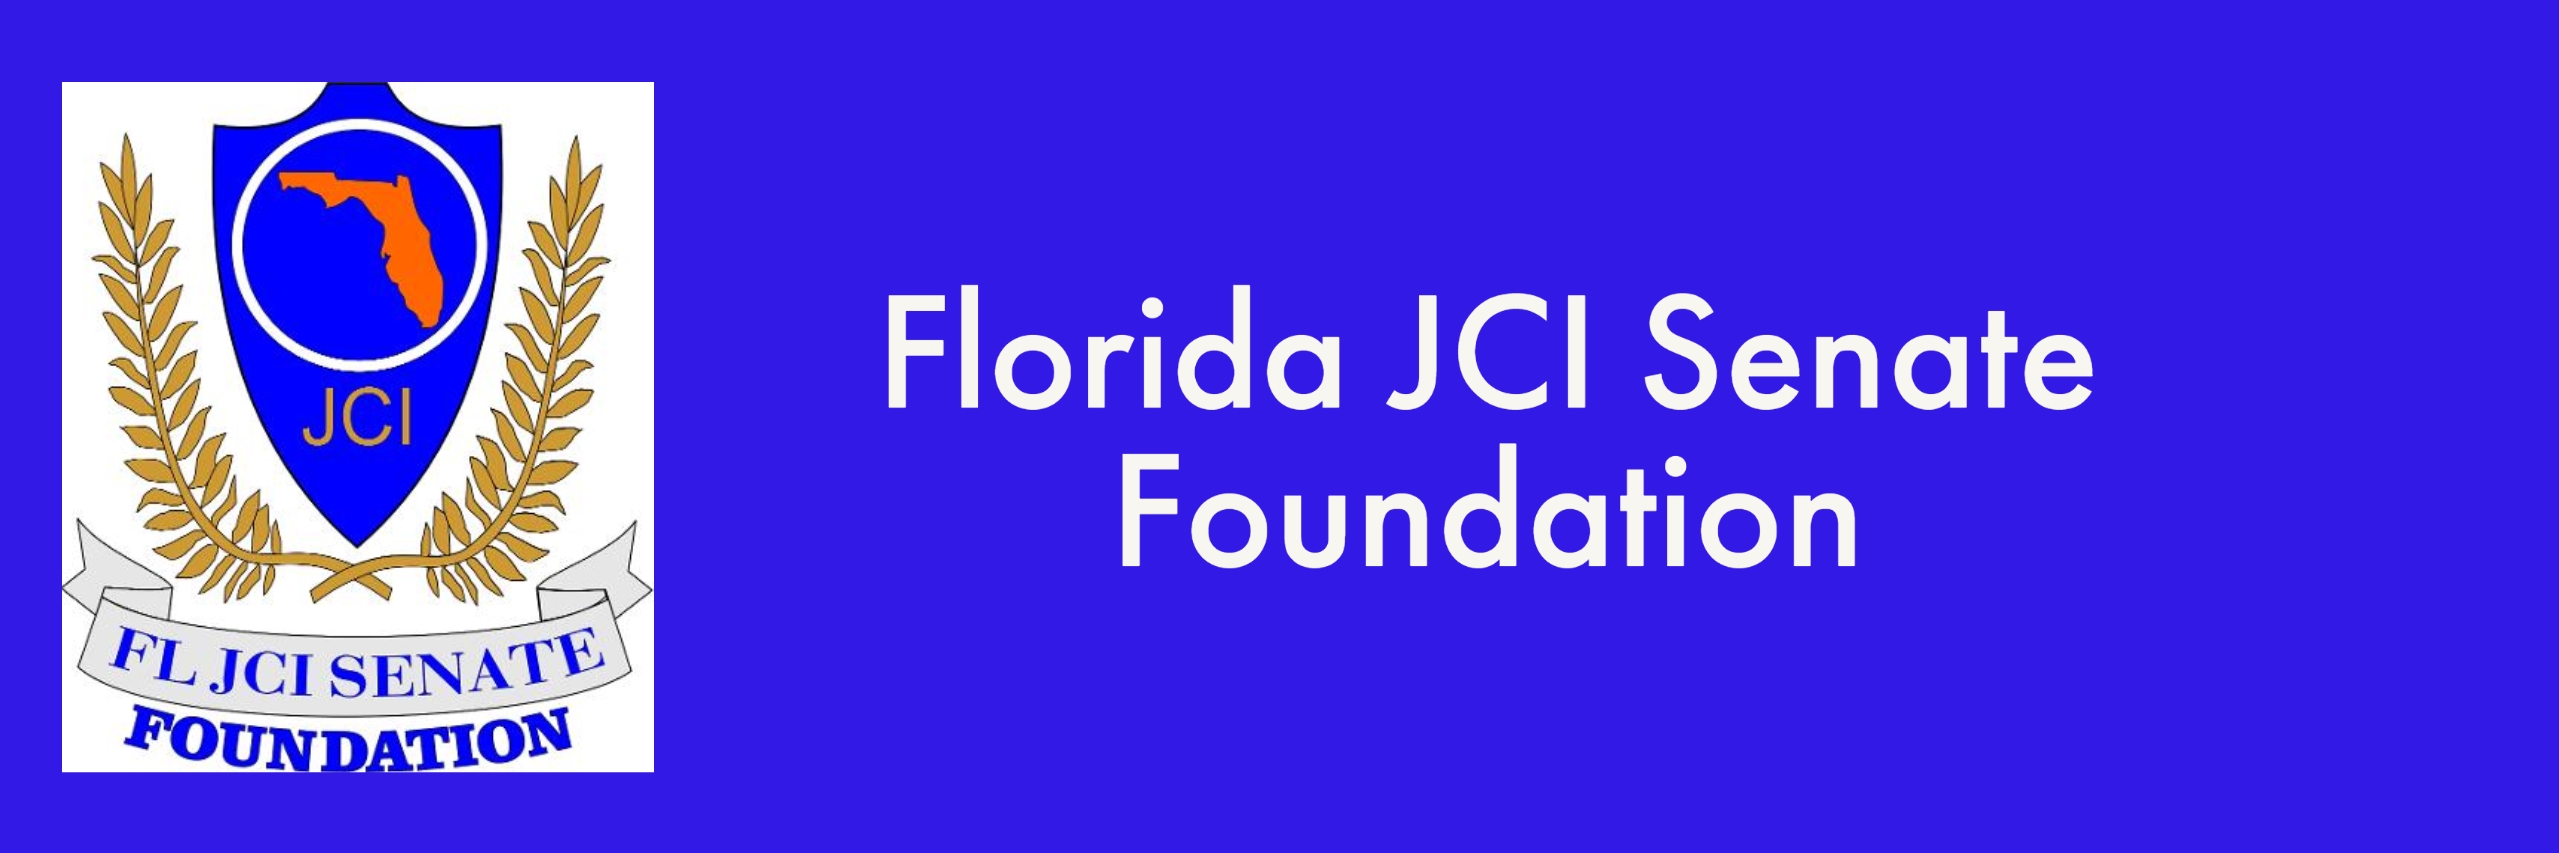 Florida JCI Senate Foundation